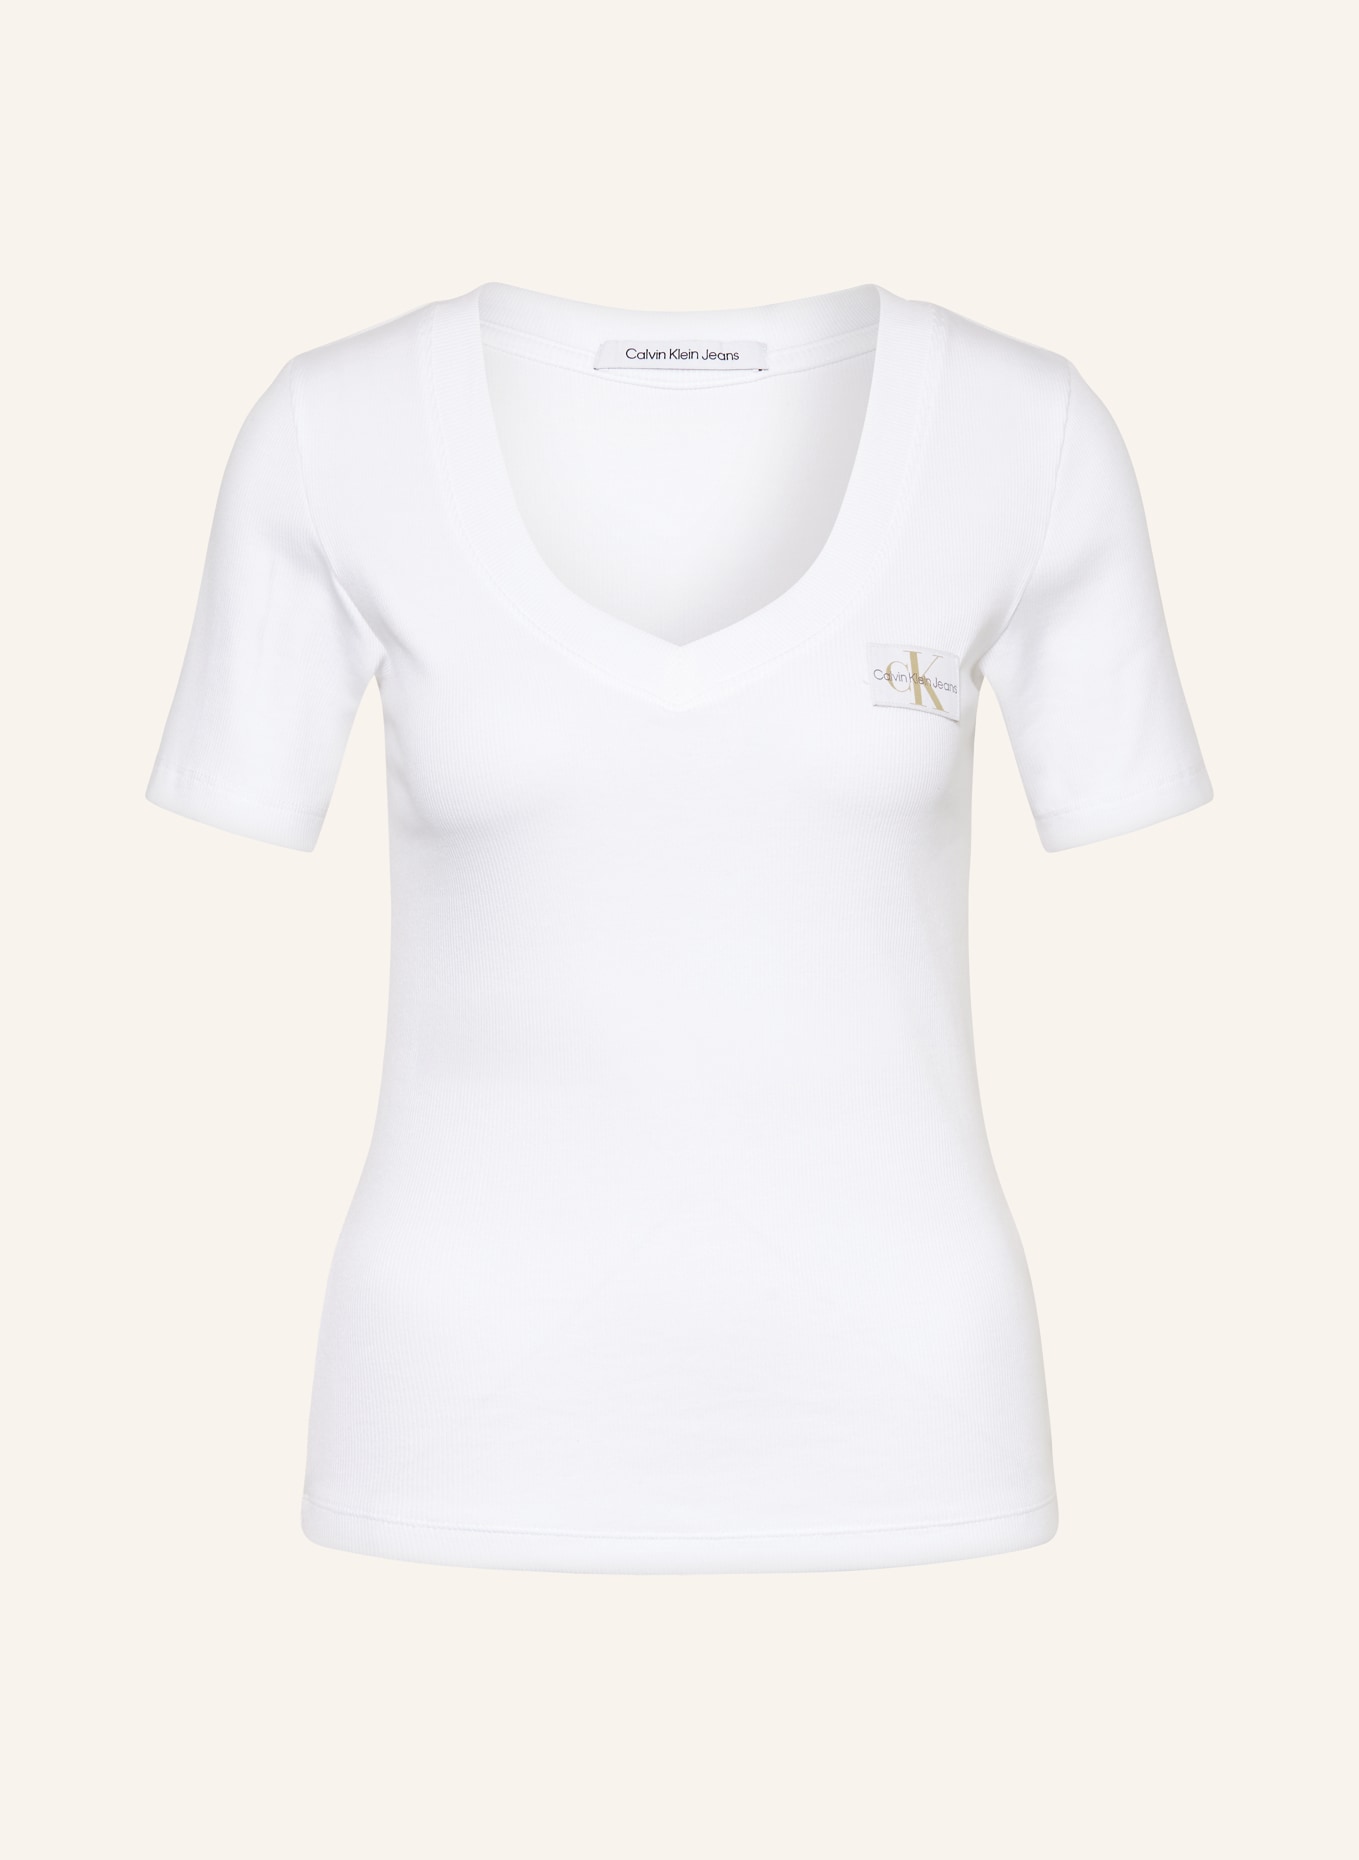 Calvin Klein Jeans T-shirt, Color: WHITE (Image 1)